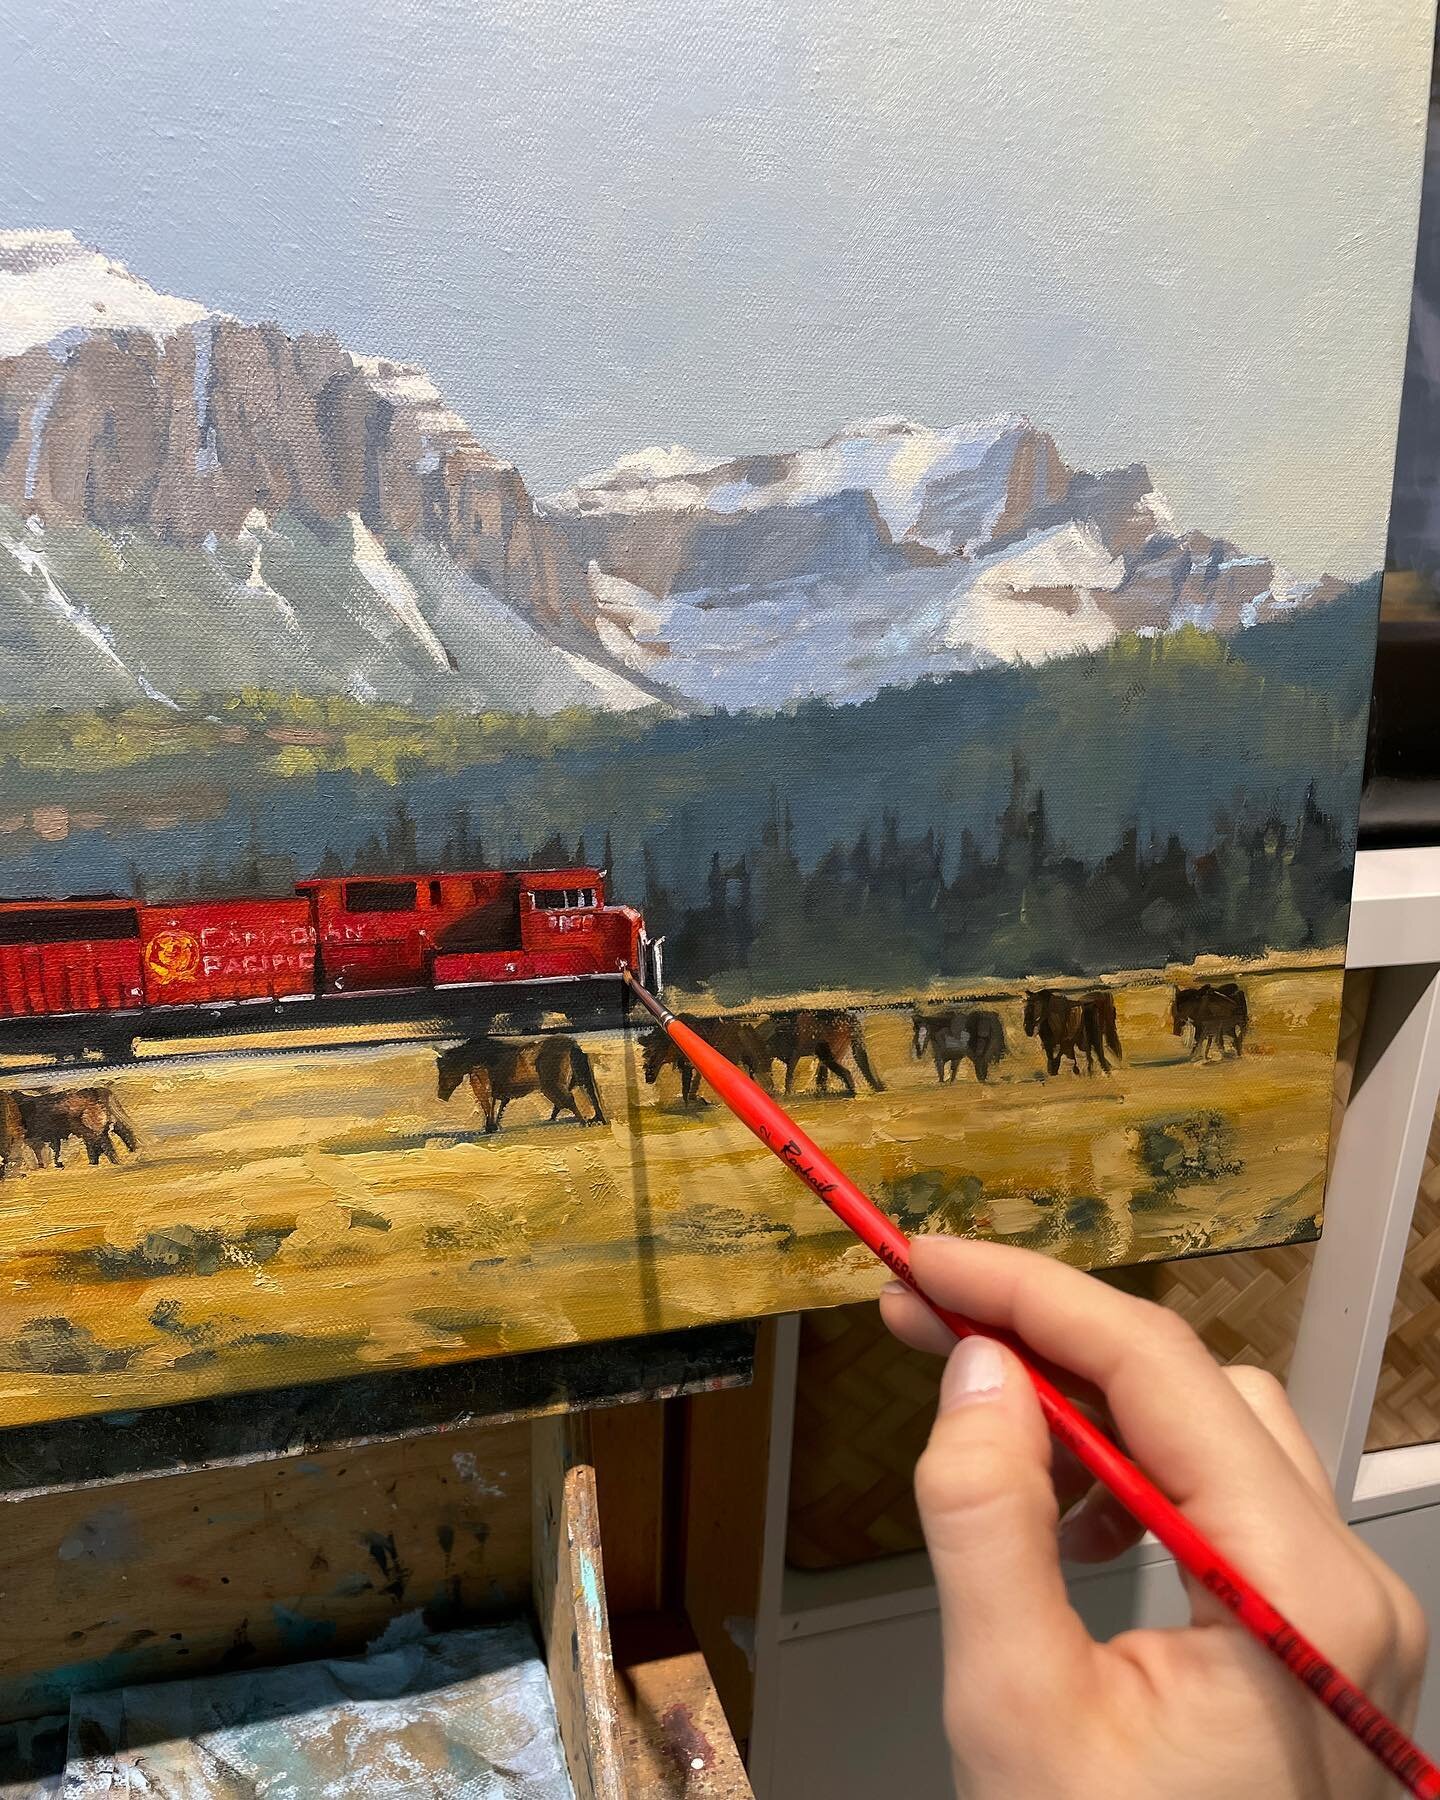 A new landscape piece in the works 🚂 
.
#landscapepainter #paintinginprogress #canadianartist #railwayart #canadianpacific #trainart